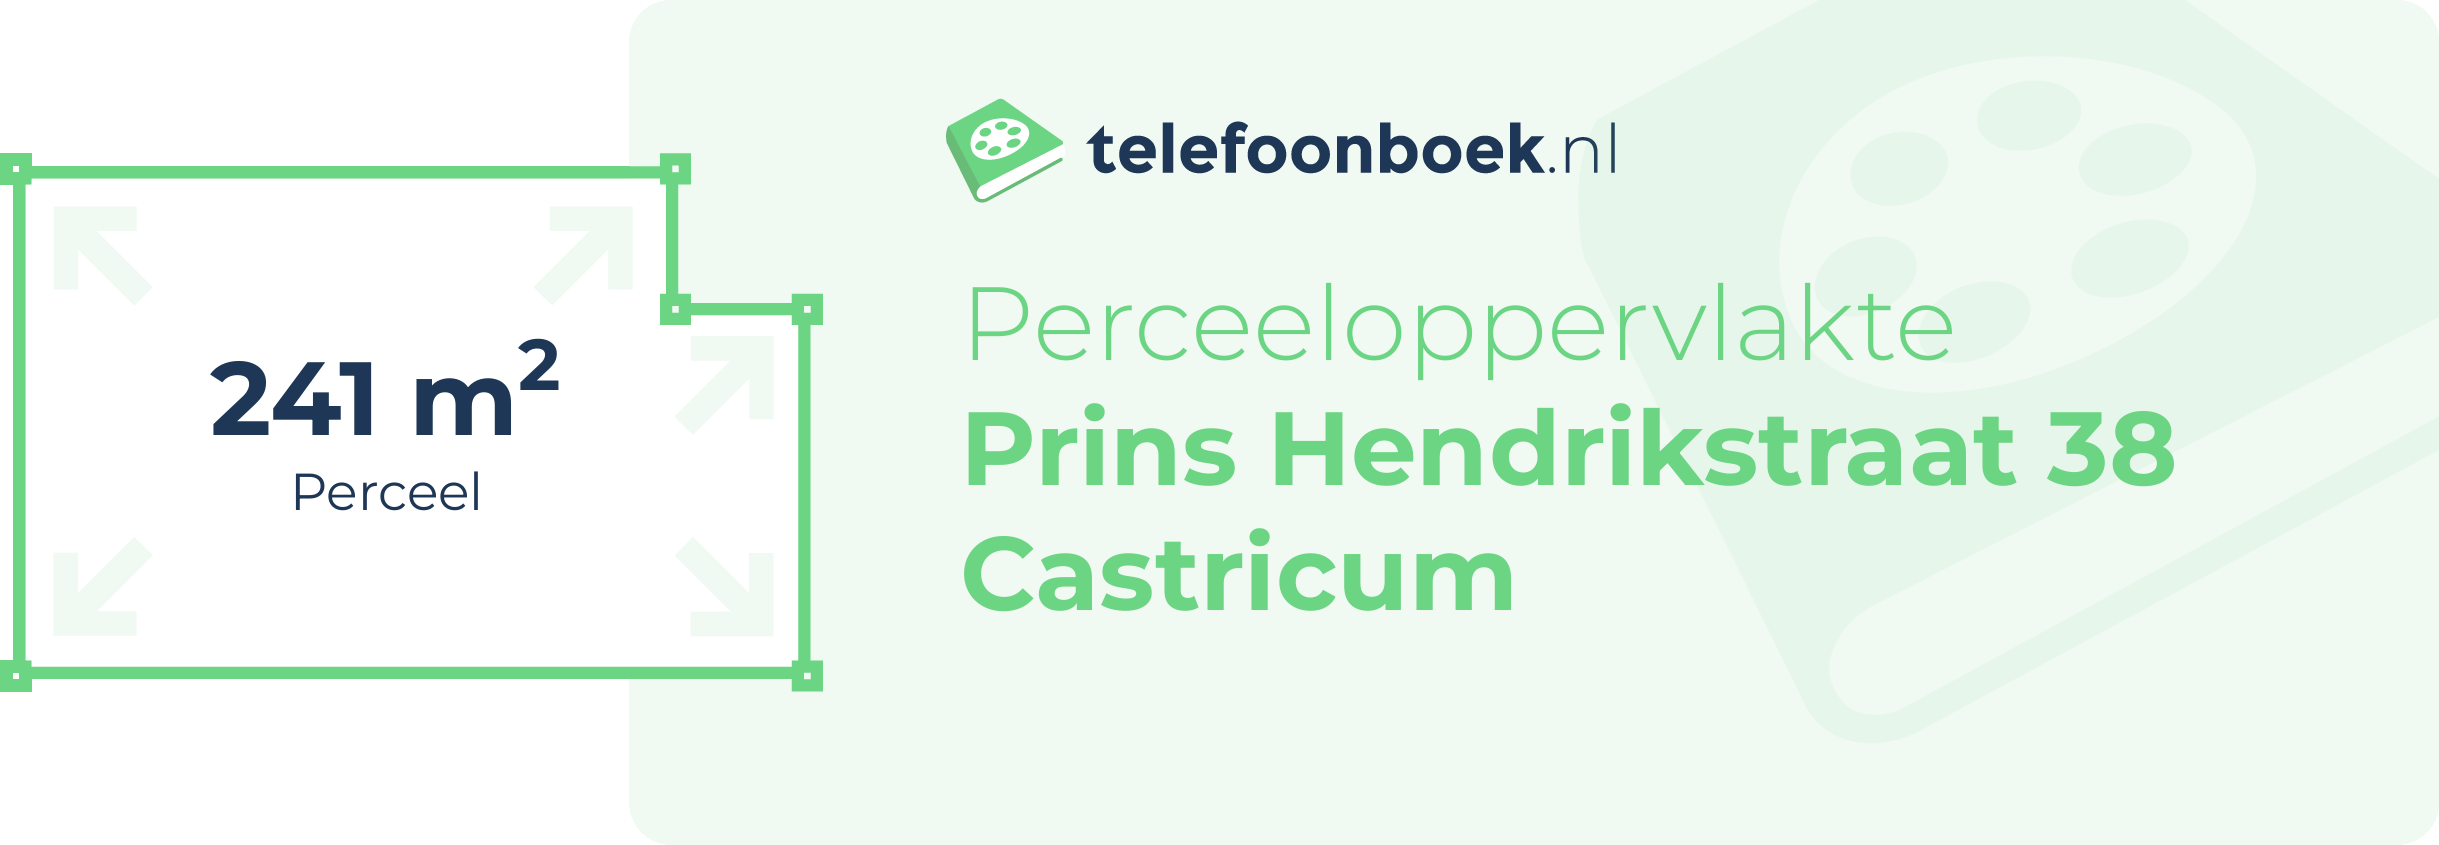 Perceeloppervlakte Prins Hendrikstraat 38 Castricum